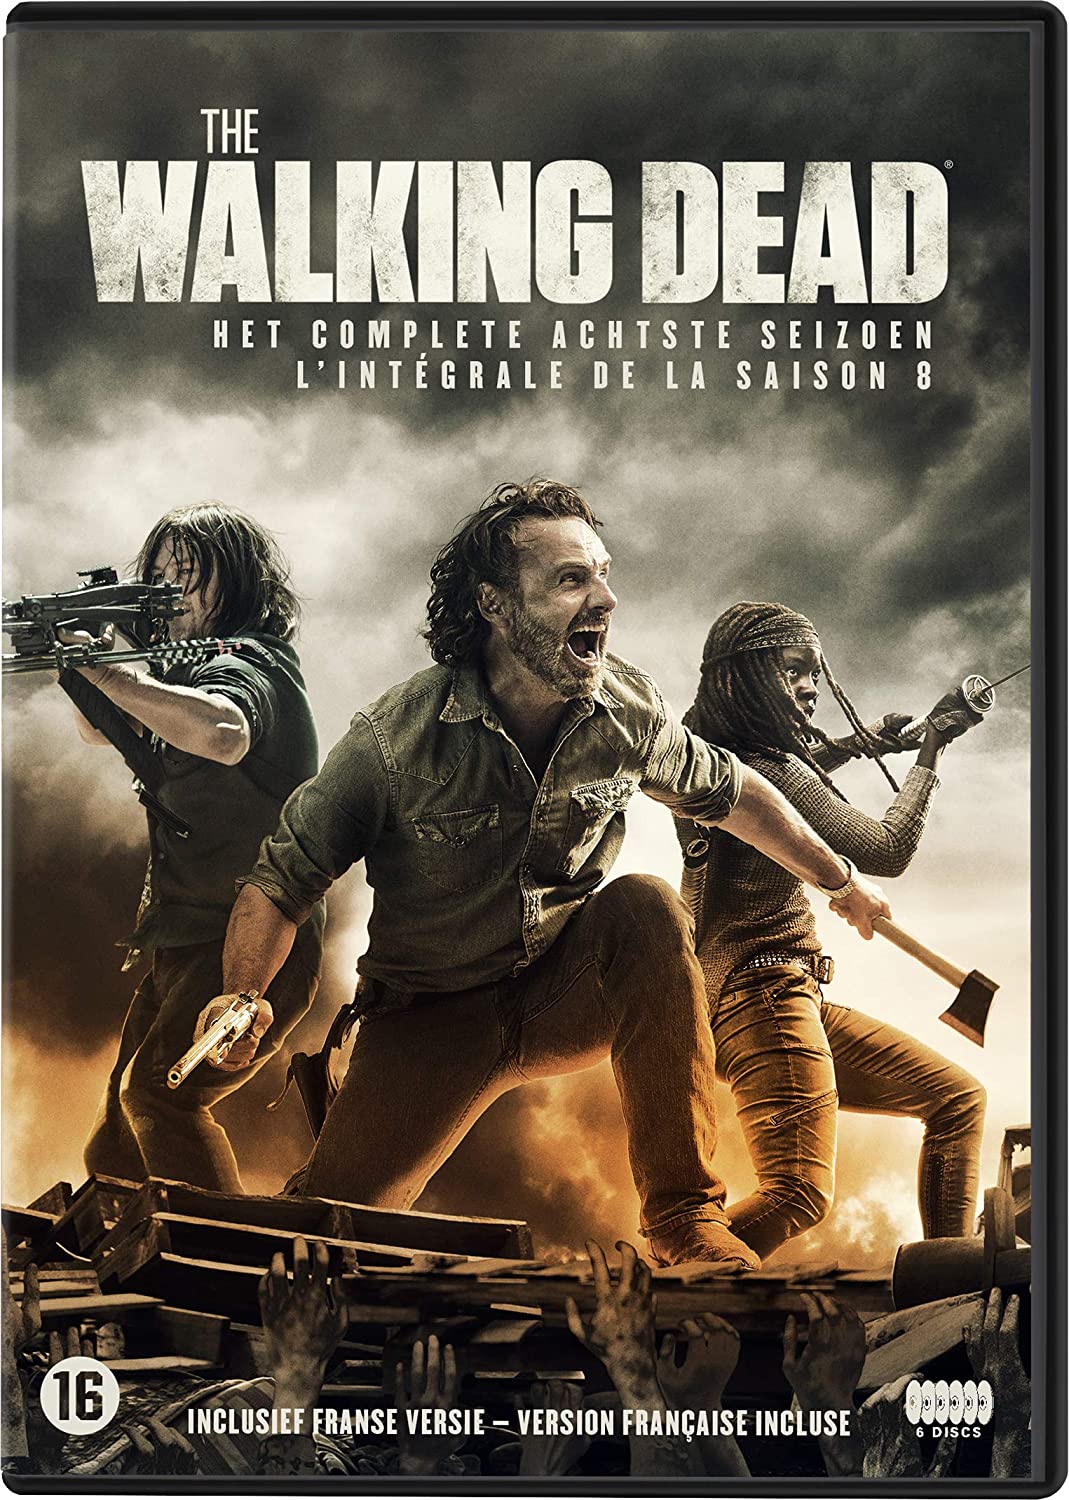 § The Walking Dead - Saison 8